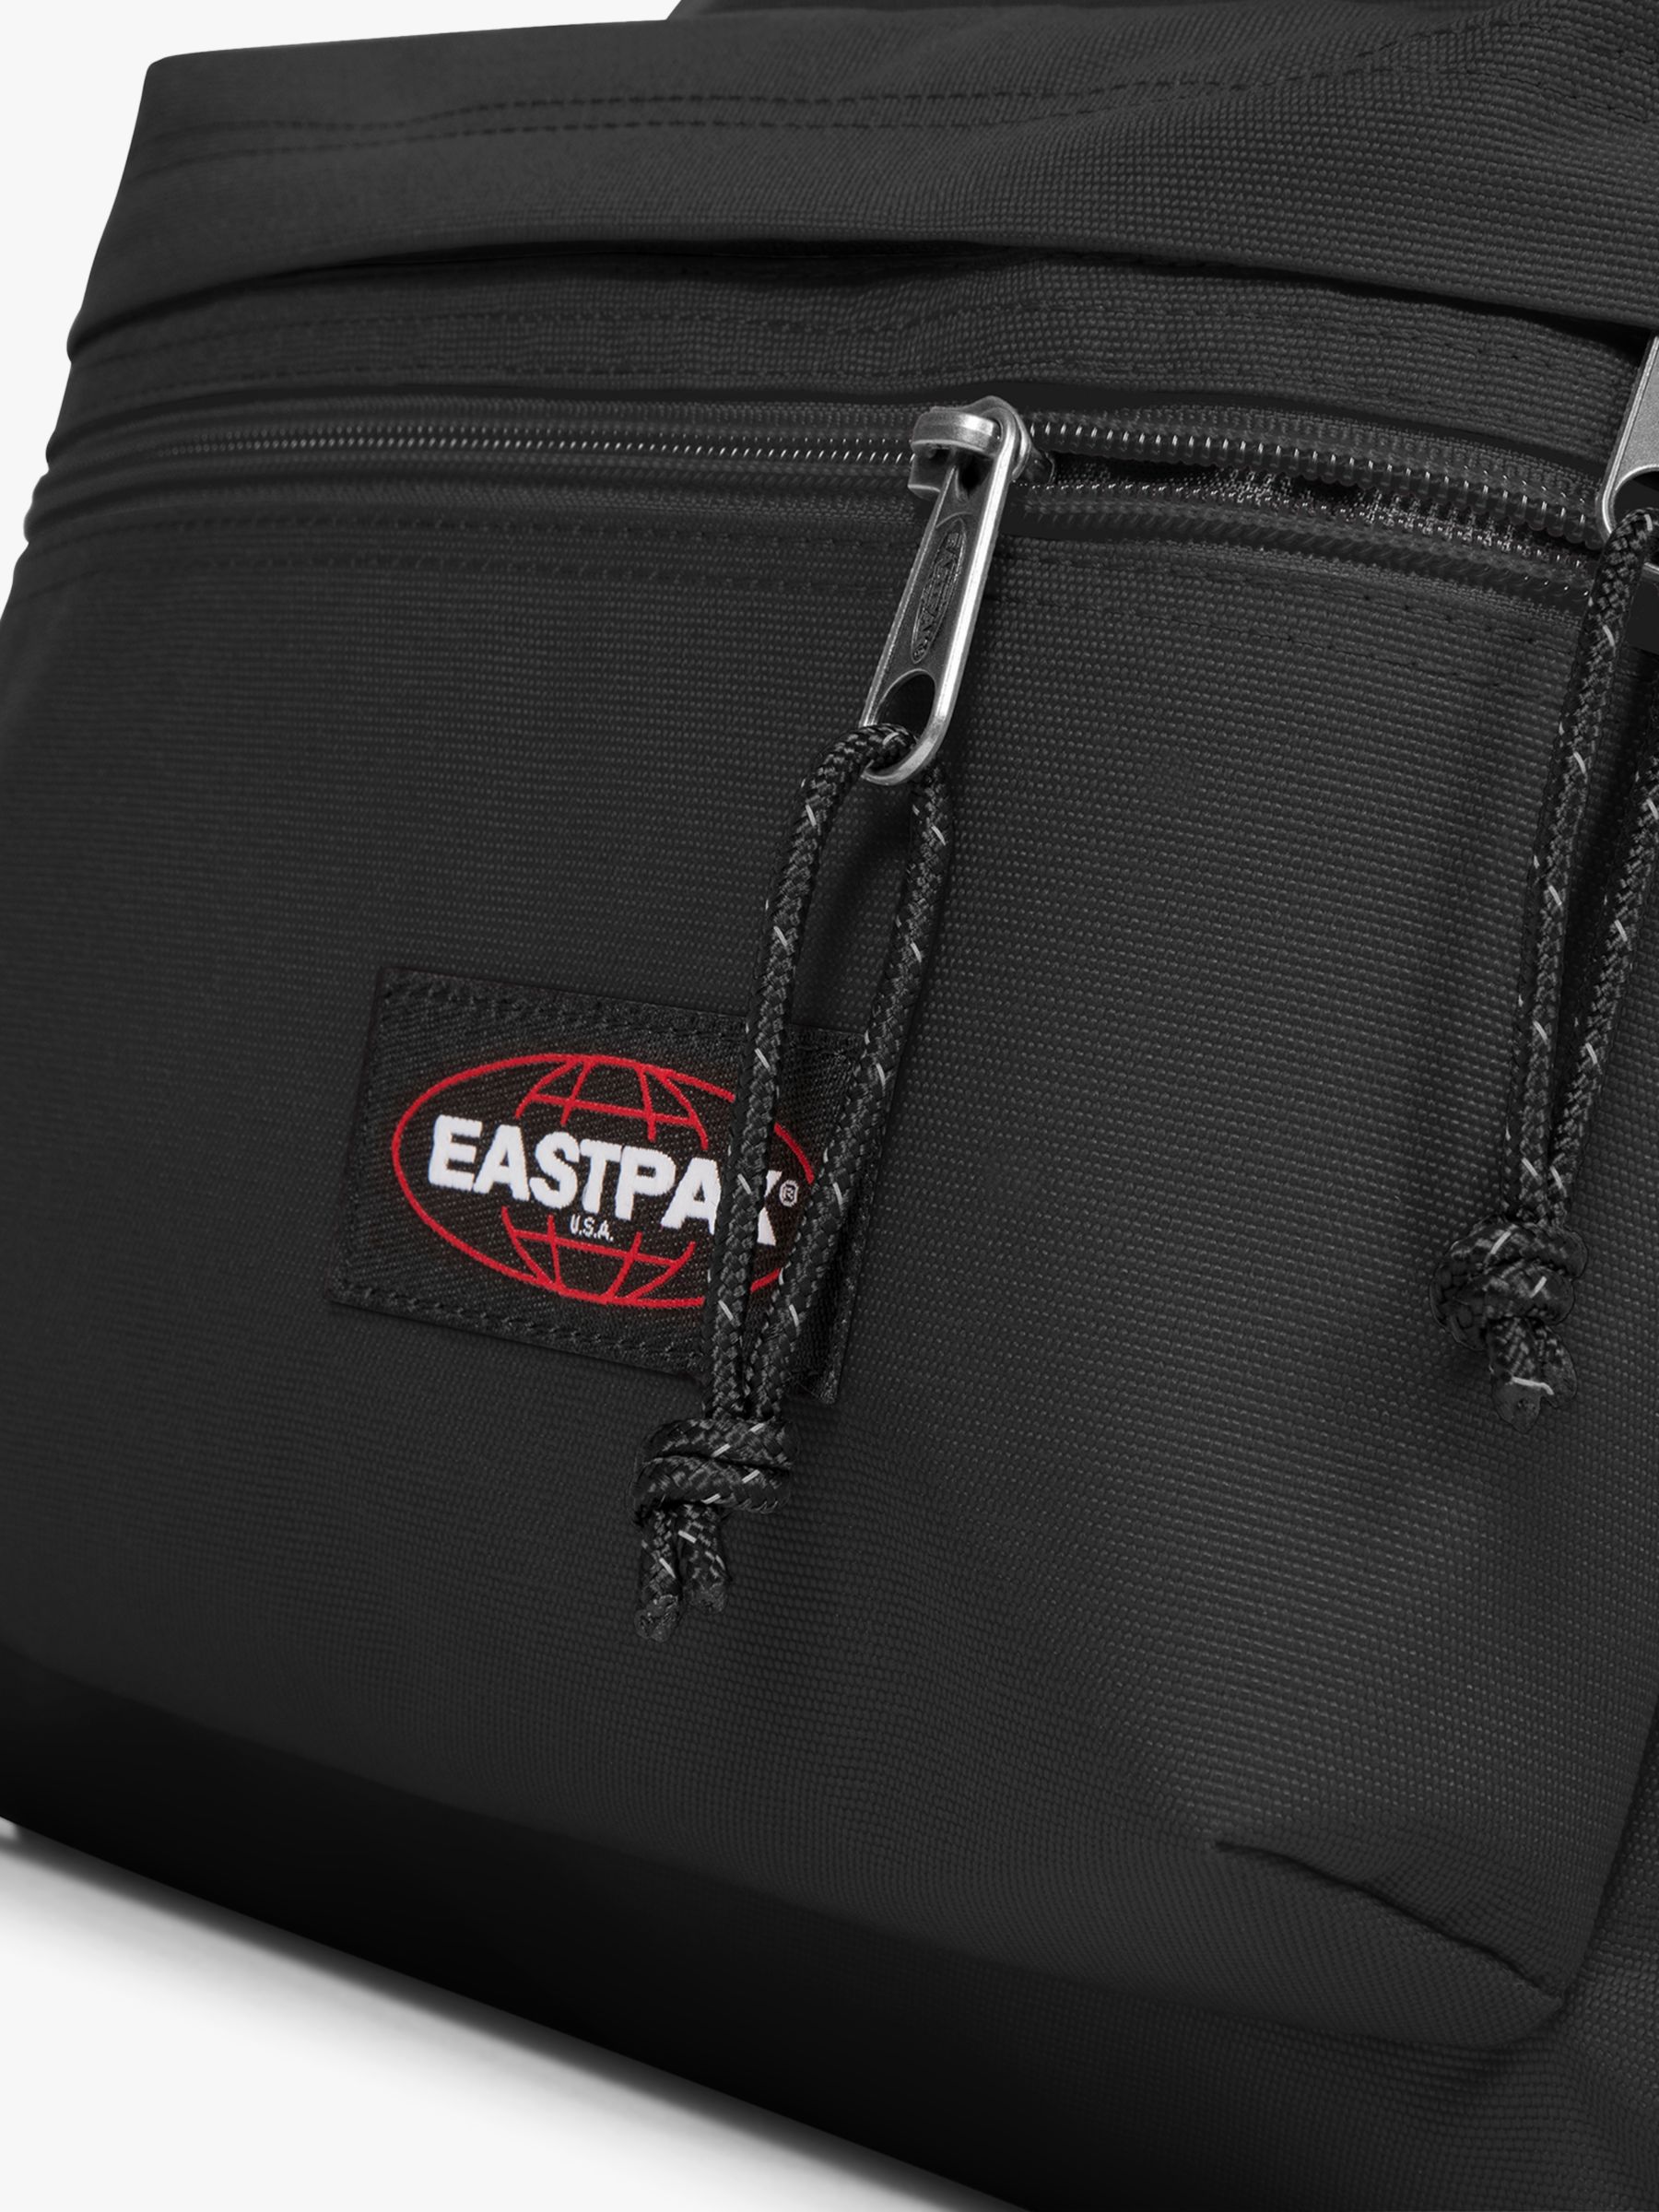 Eastpak Padded Backpack, Black